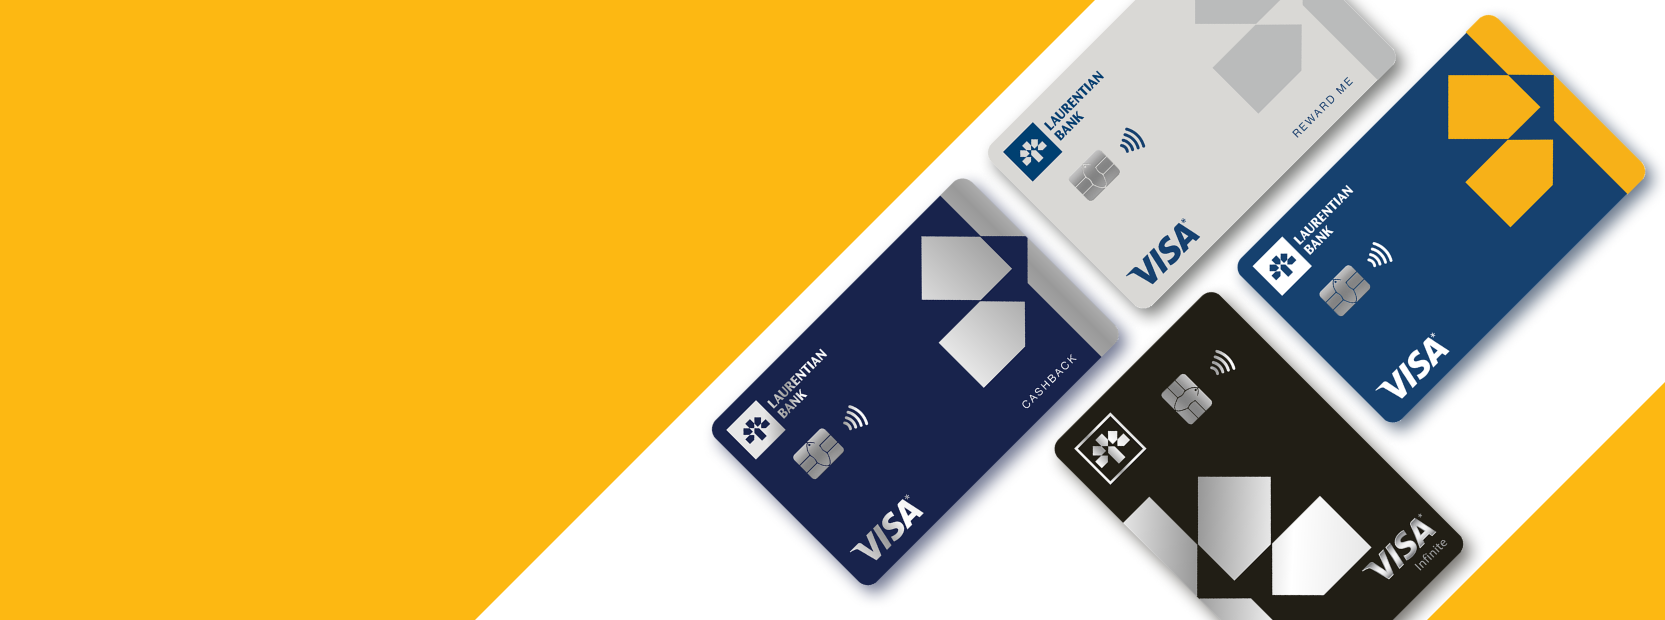 Four credit cards display together: The Laurentian Bank Visa* Cashback, Laurentian Bank Visa* Reward Me, Laurentian Bank Visa* Reduced Rate and Laurentian Bank Visa Infinite*.